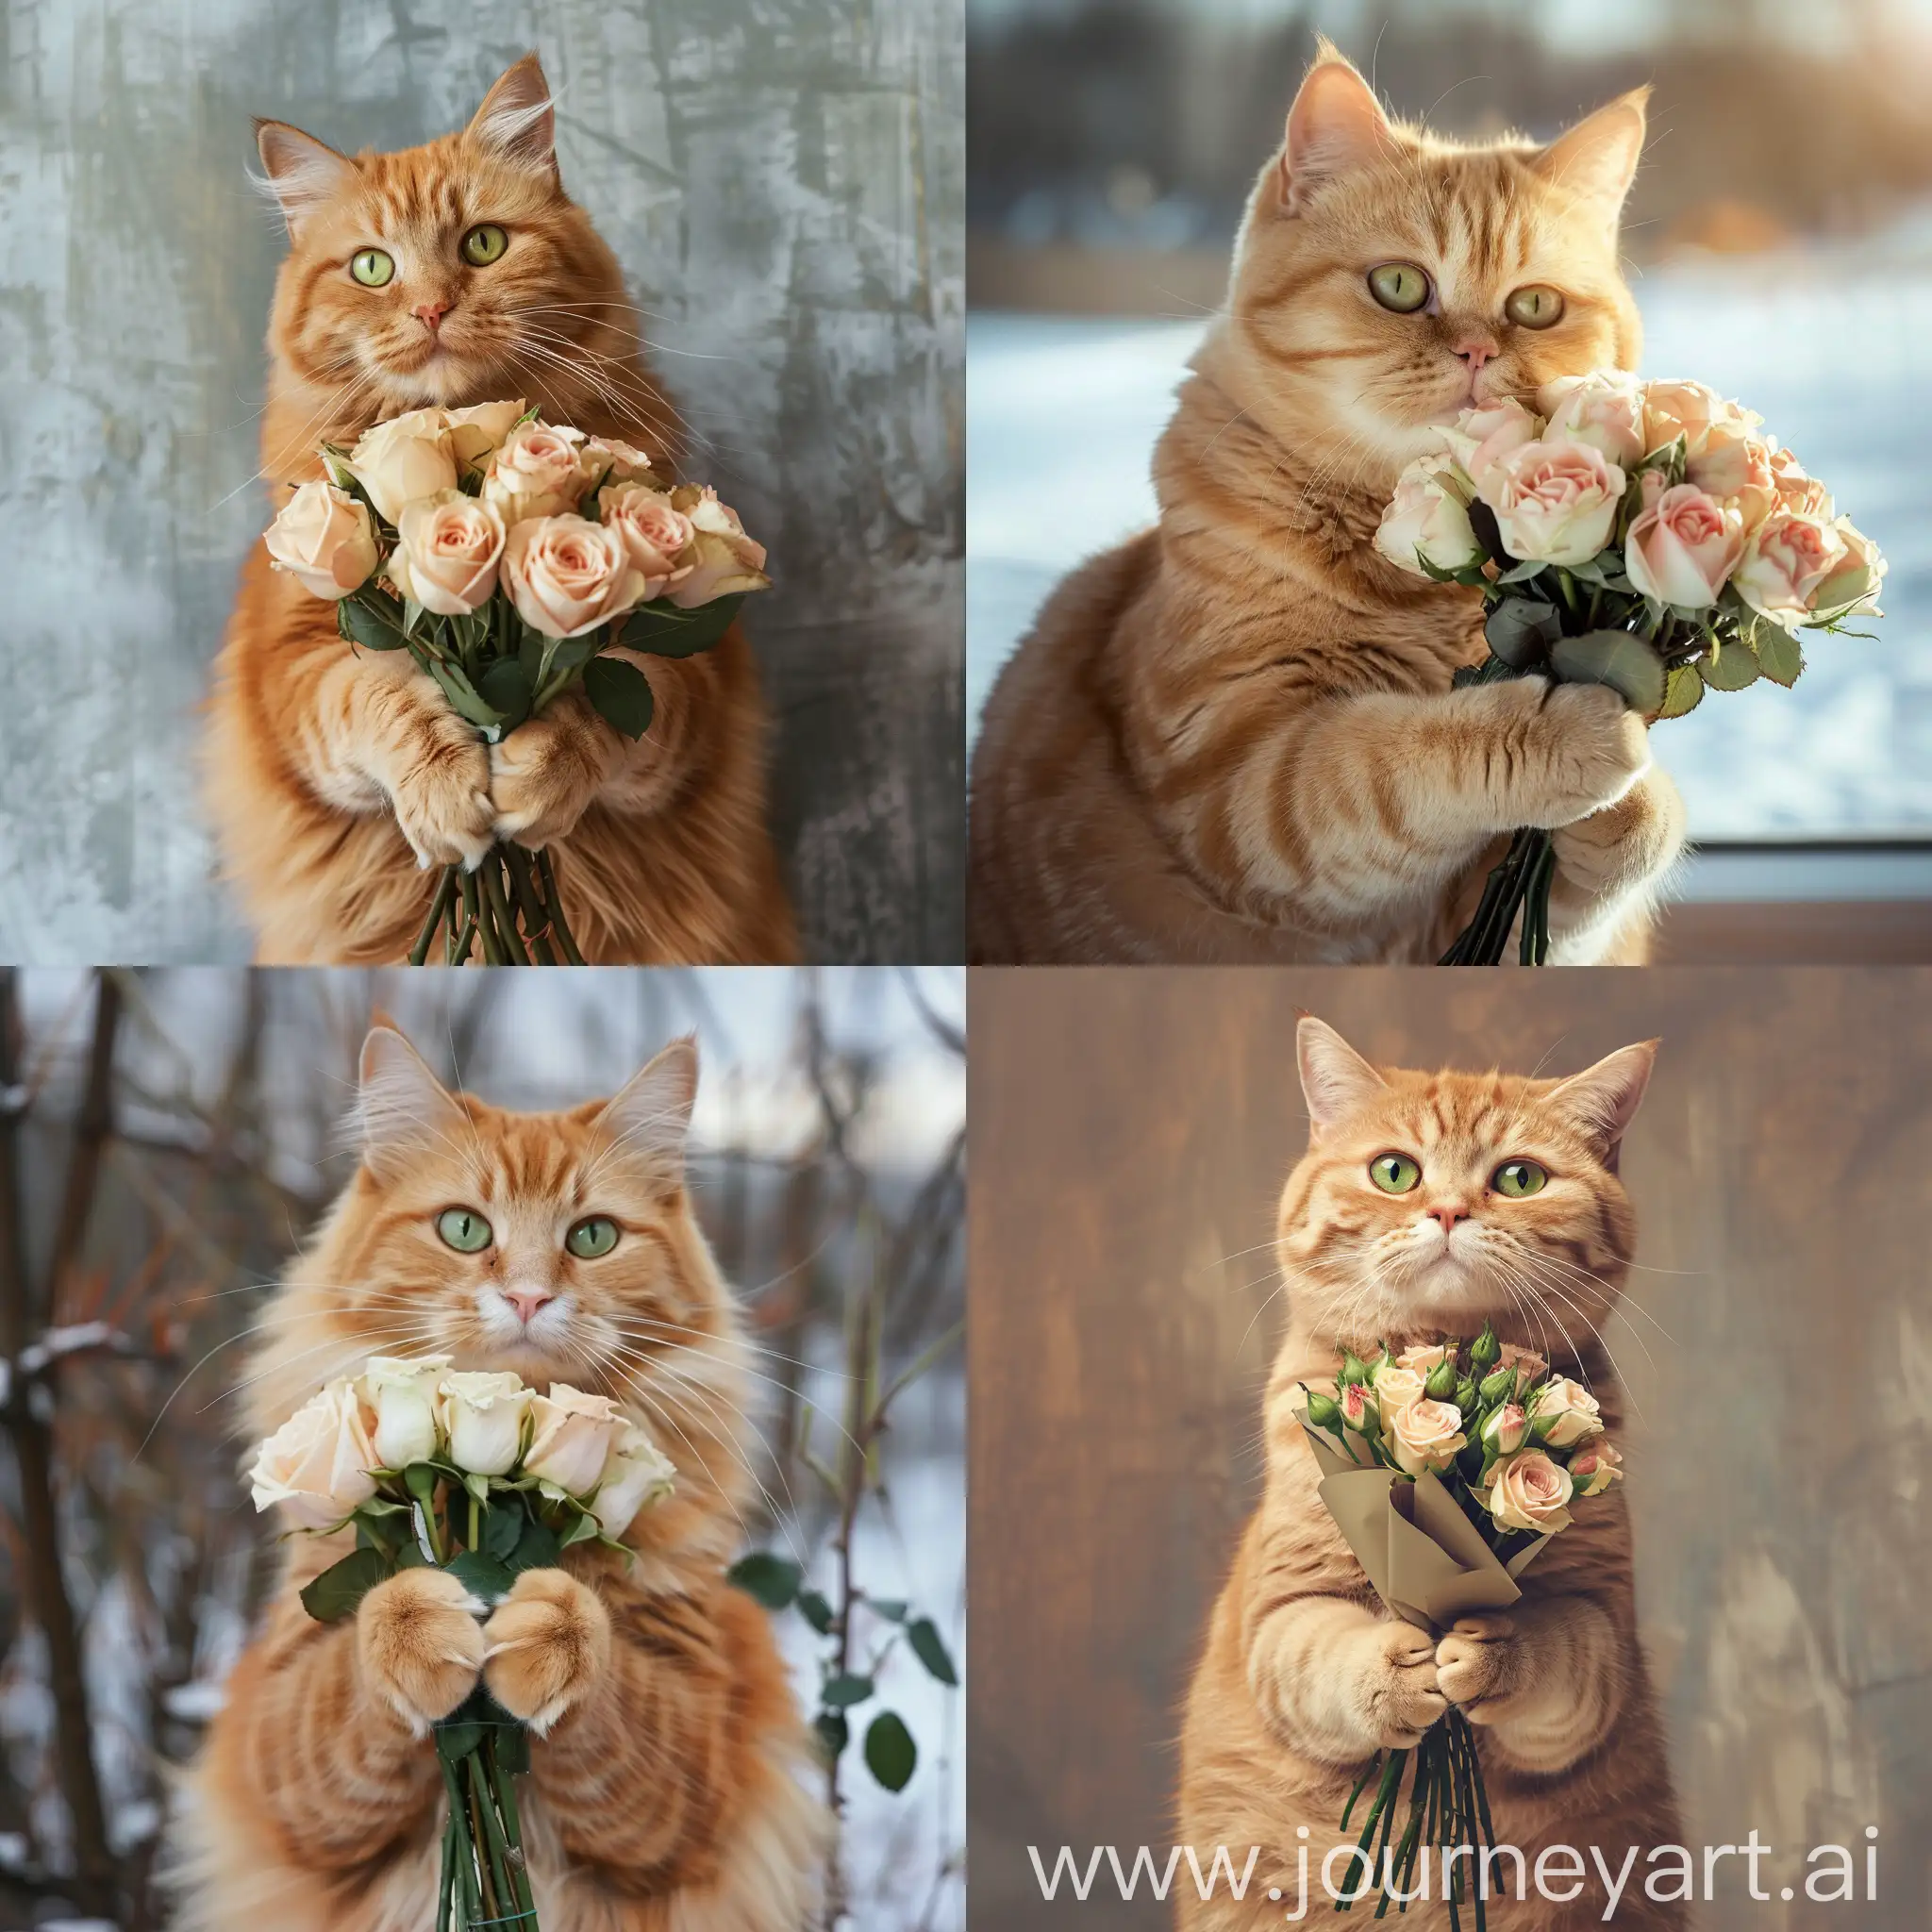 Joyful-British-Cat-Celebrates-Spring-with-a-Bouquet-of-Roses